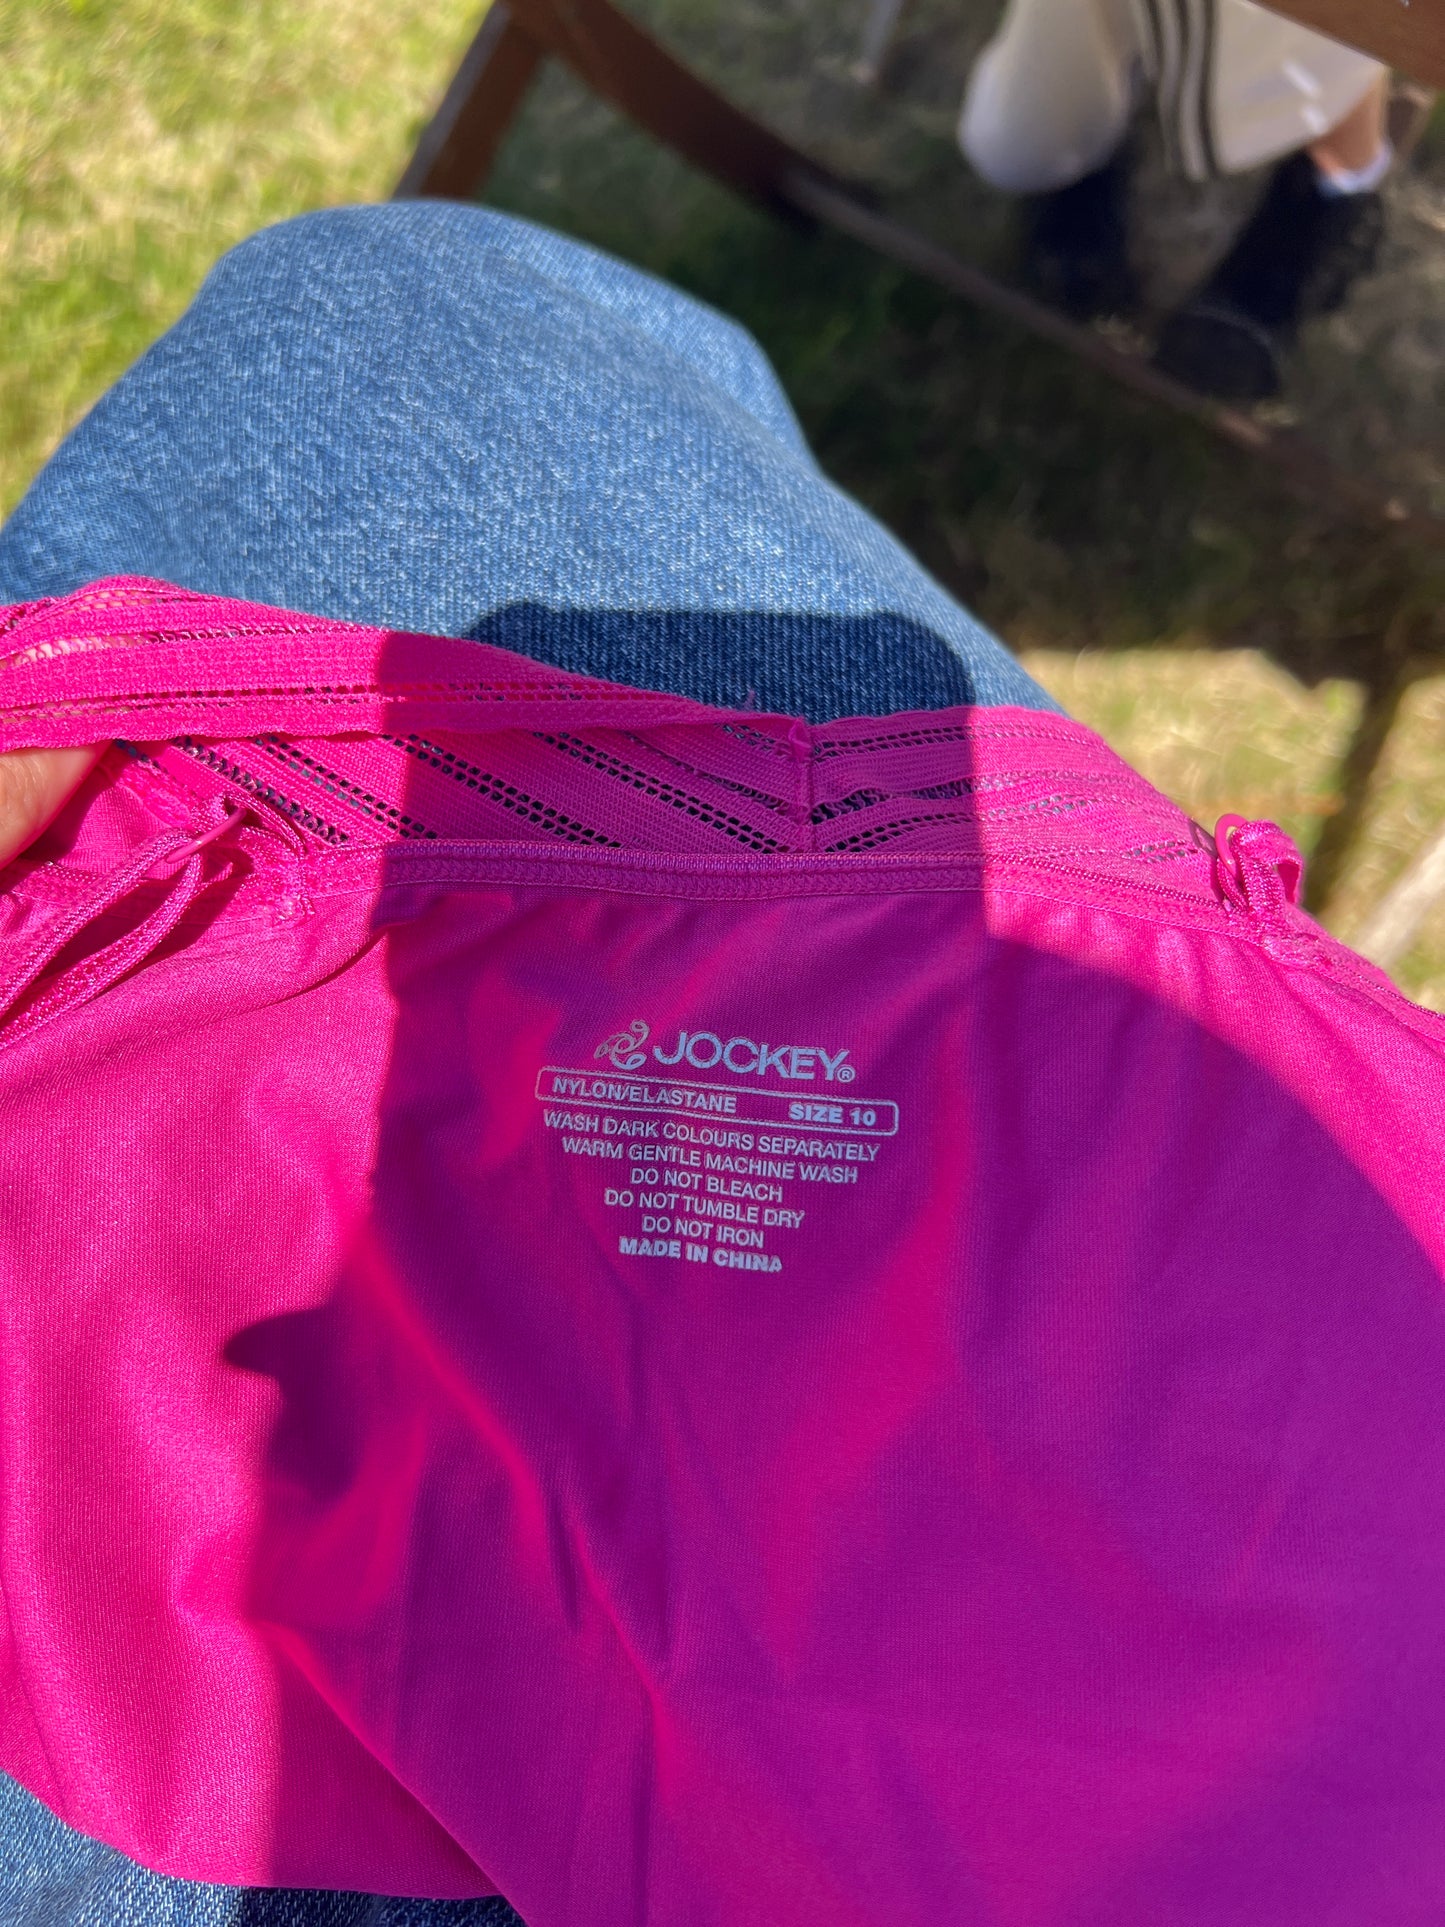 PUB GARDEN DROP | medium pink v neck cami